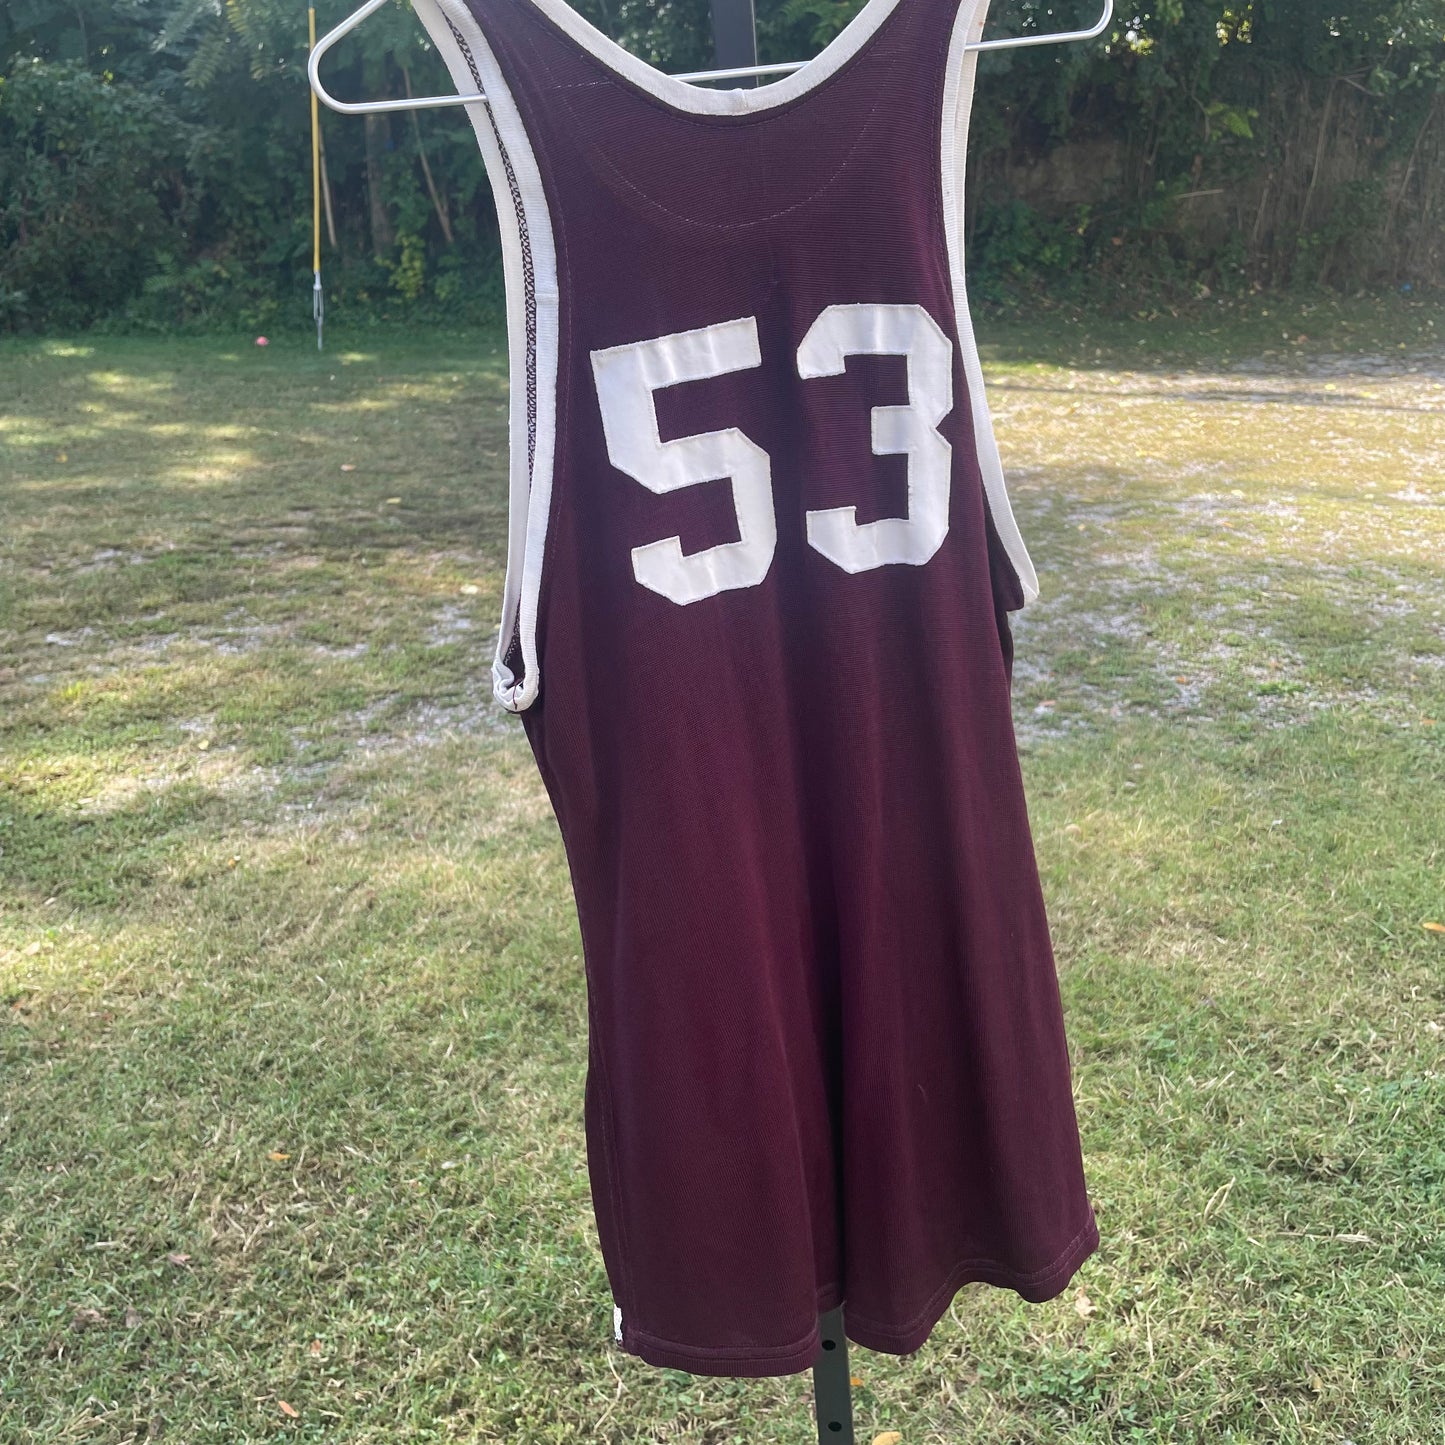 VTG 1950s 'Hesston 53' Basketball Jersey